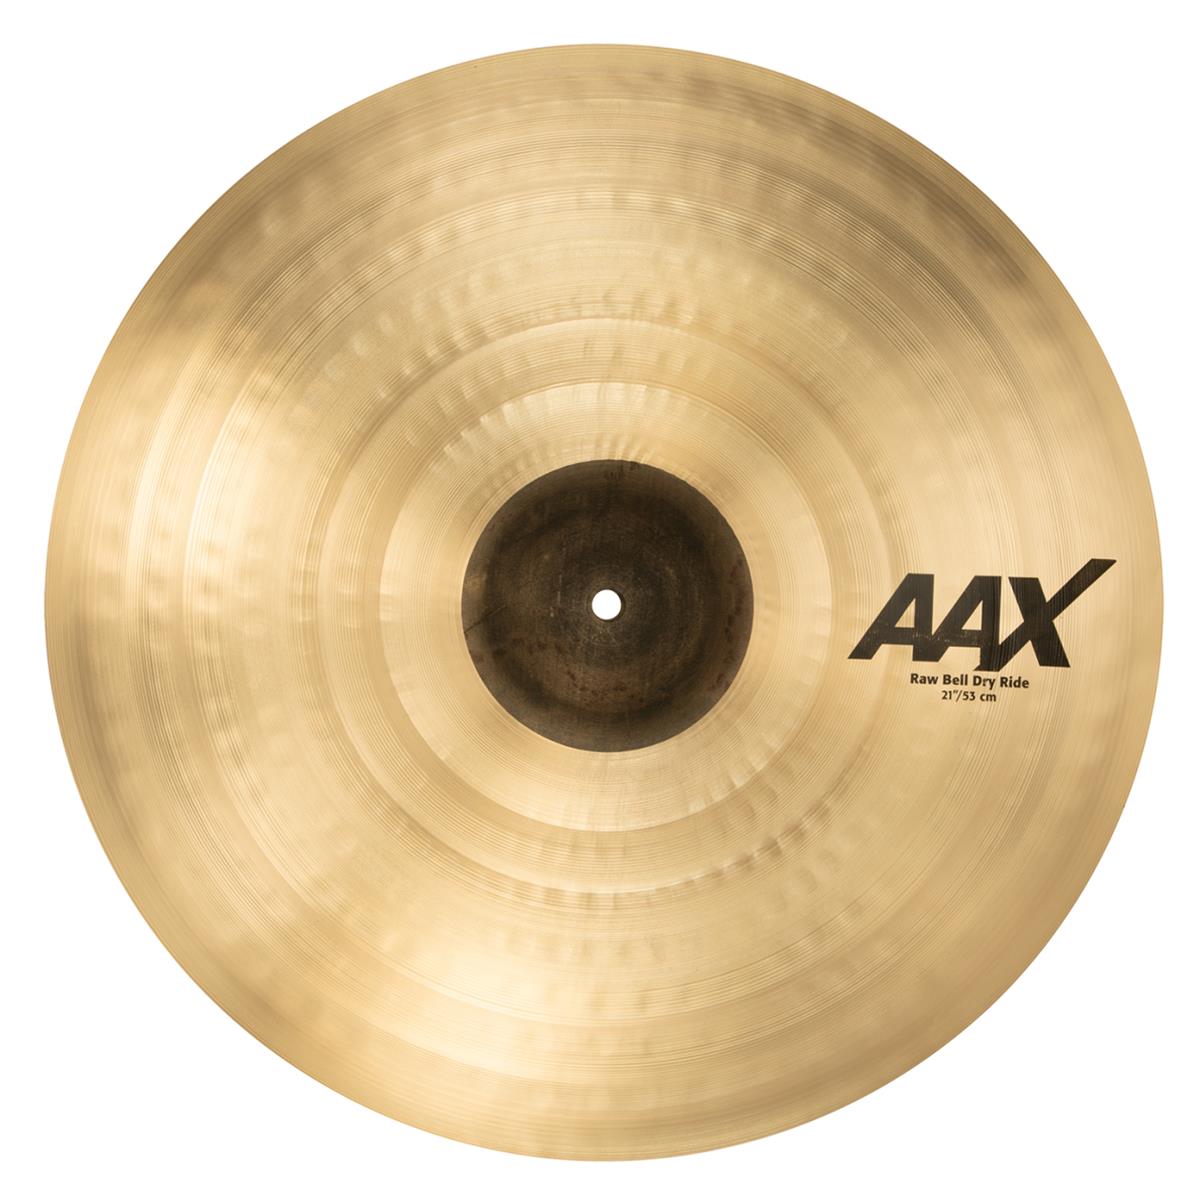 Sabian 21" AAX Raw Bell Dry Ride Cymbal, Medium-Heavy, Natural/Raw Finish -  22172X